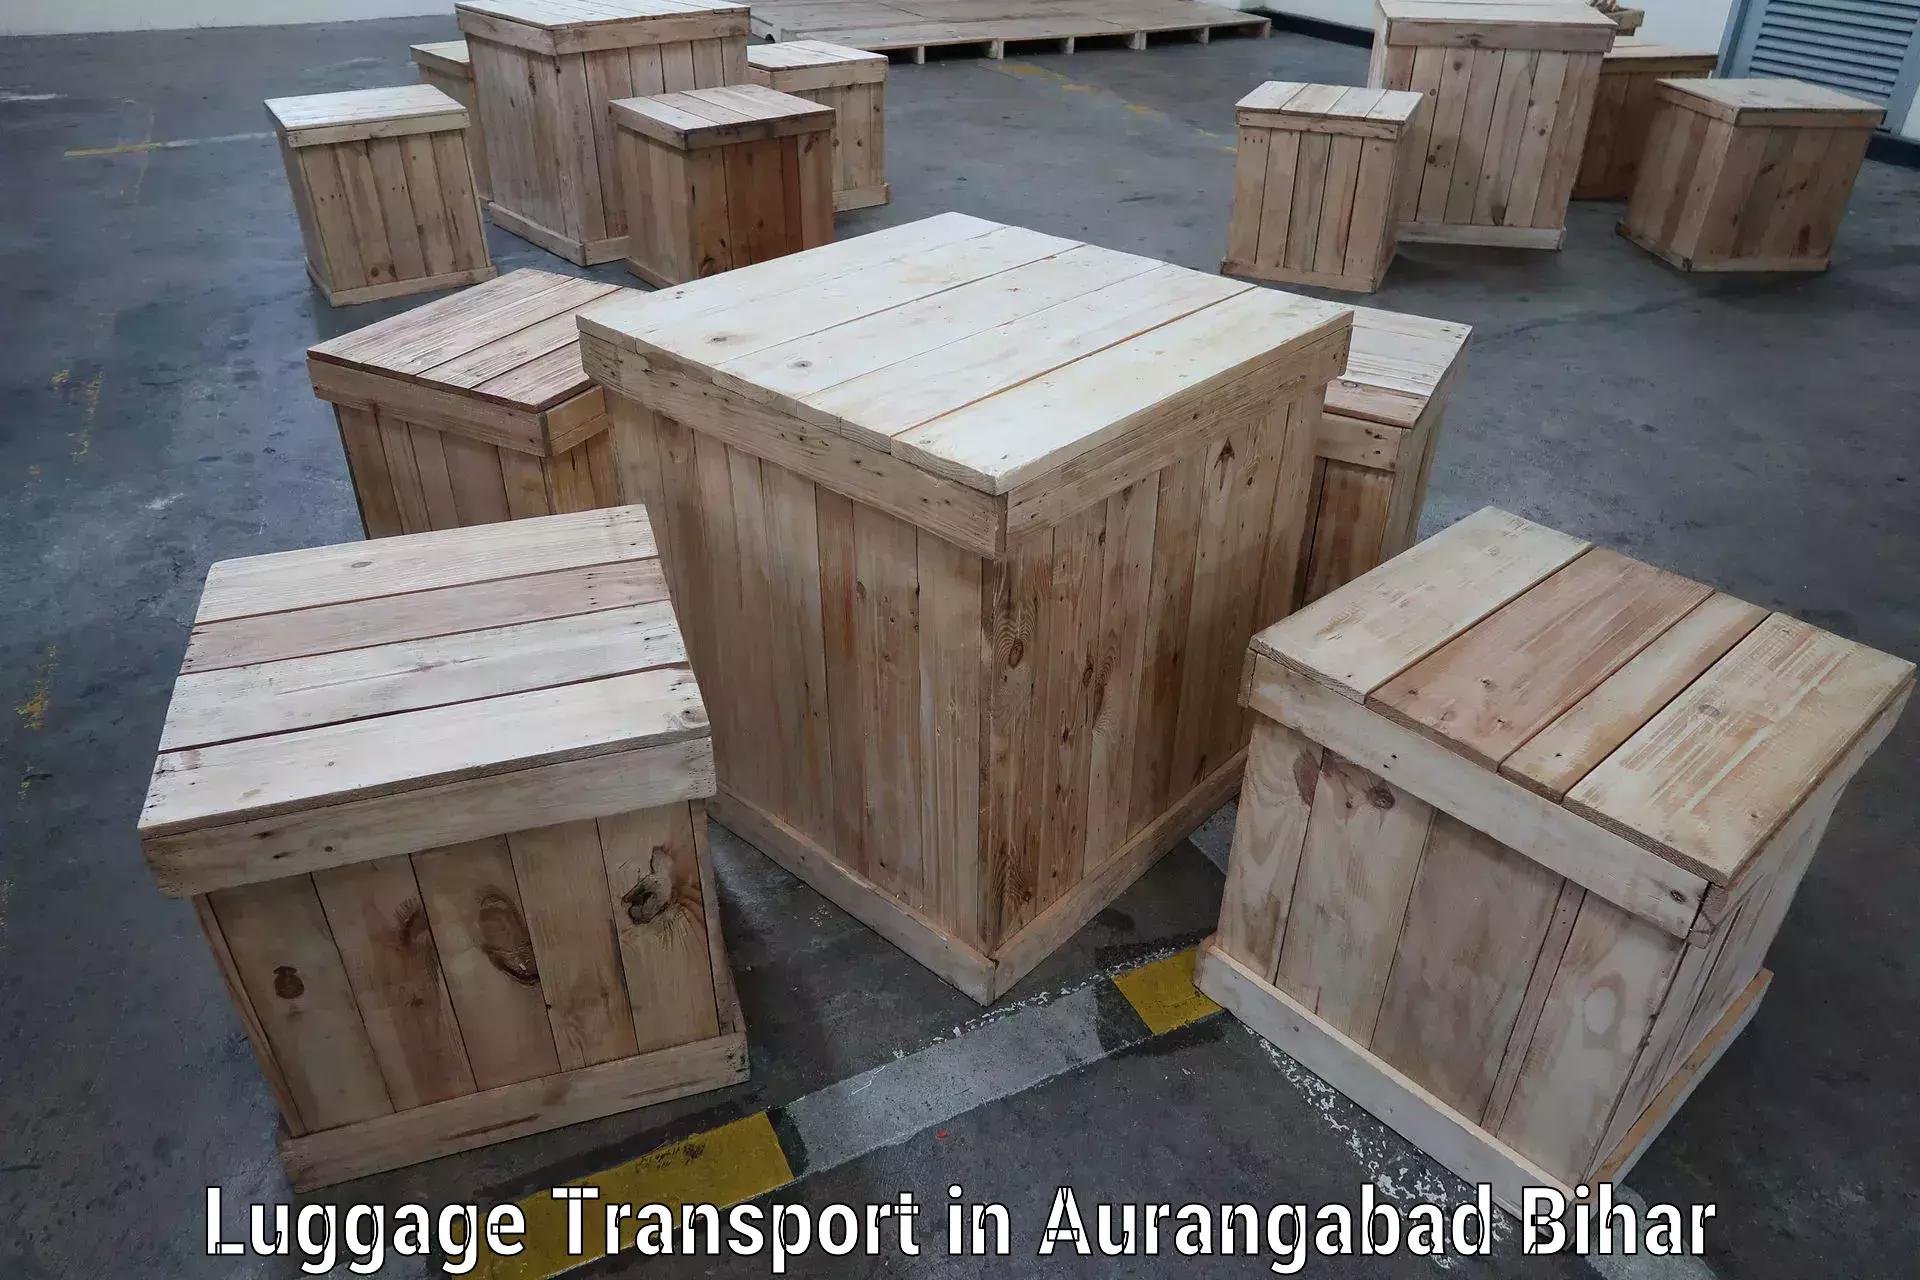 Long distance luggage transport in Aurangabad Bihar